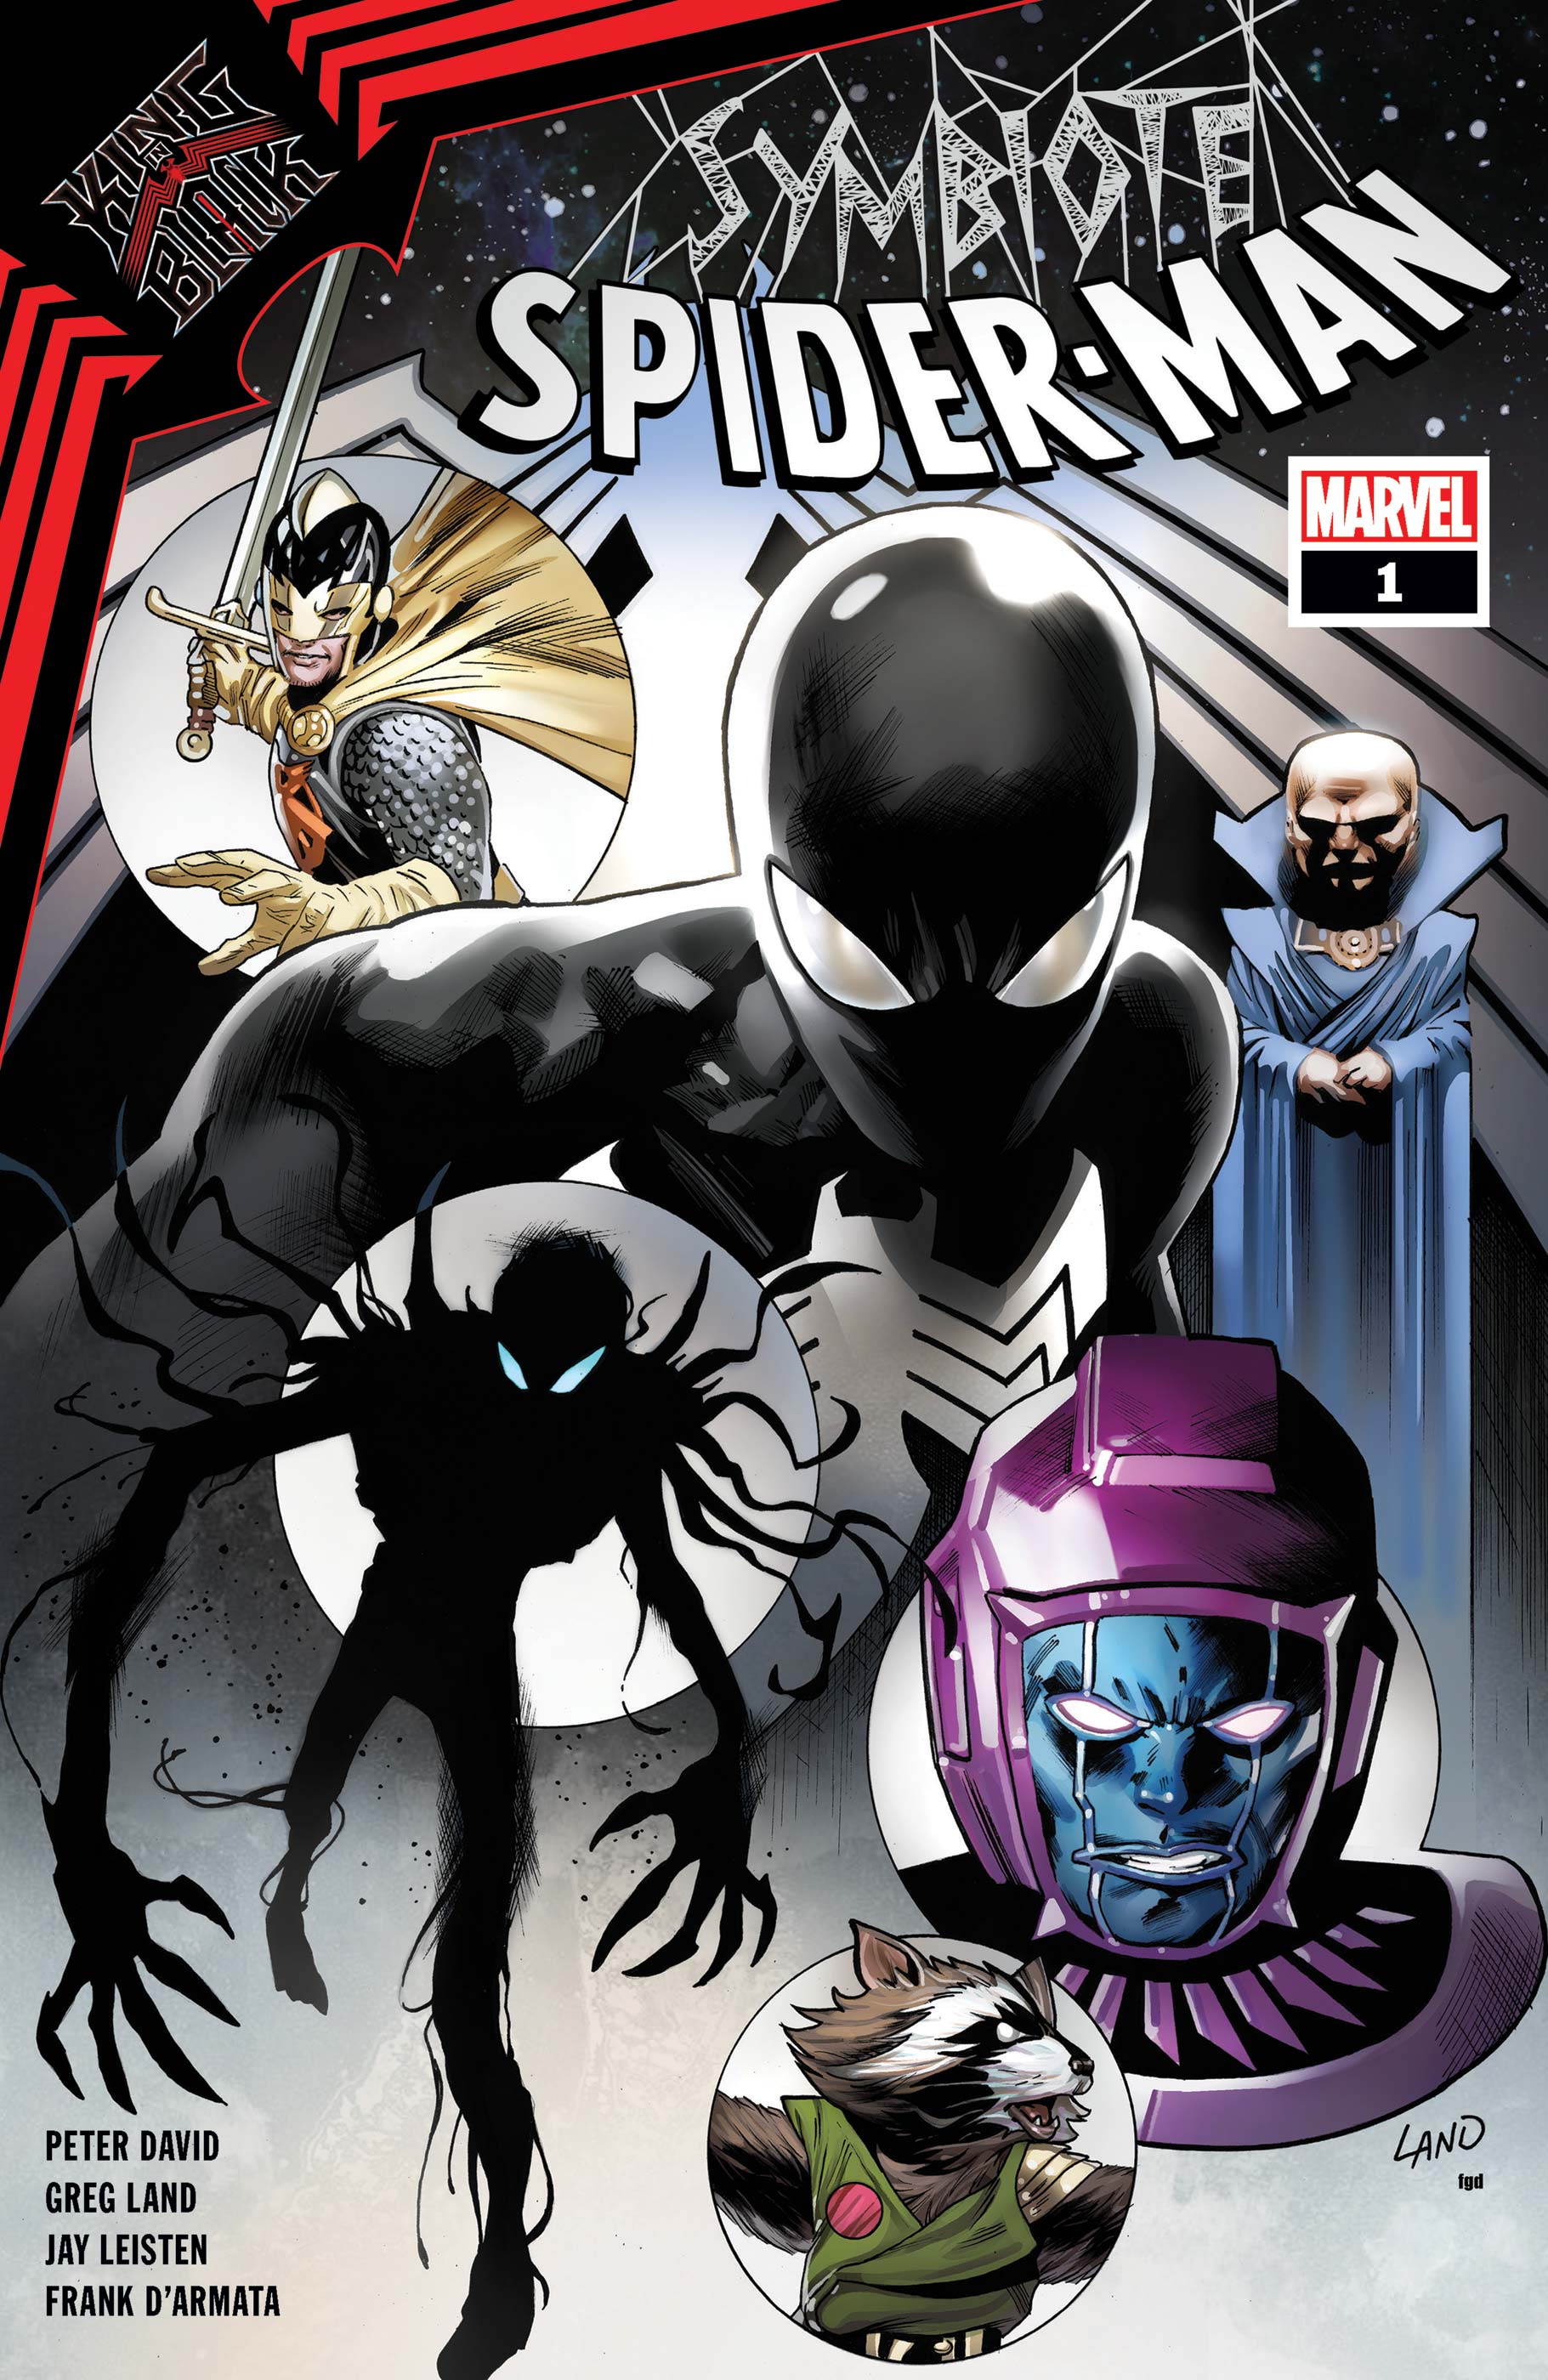 Symbiote Spider-Man: King in Black (2020) #1